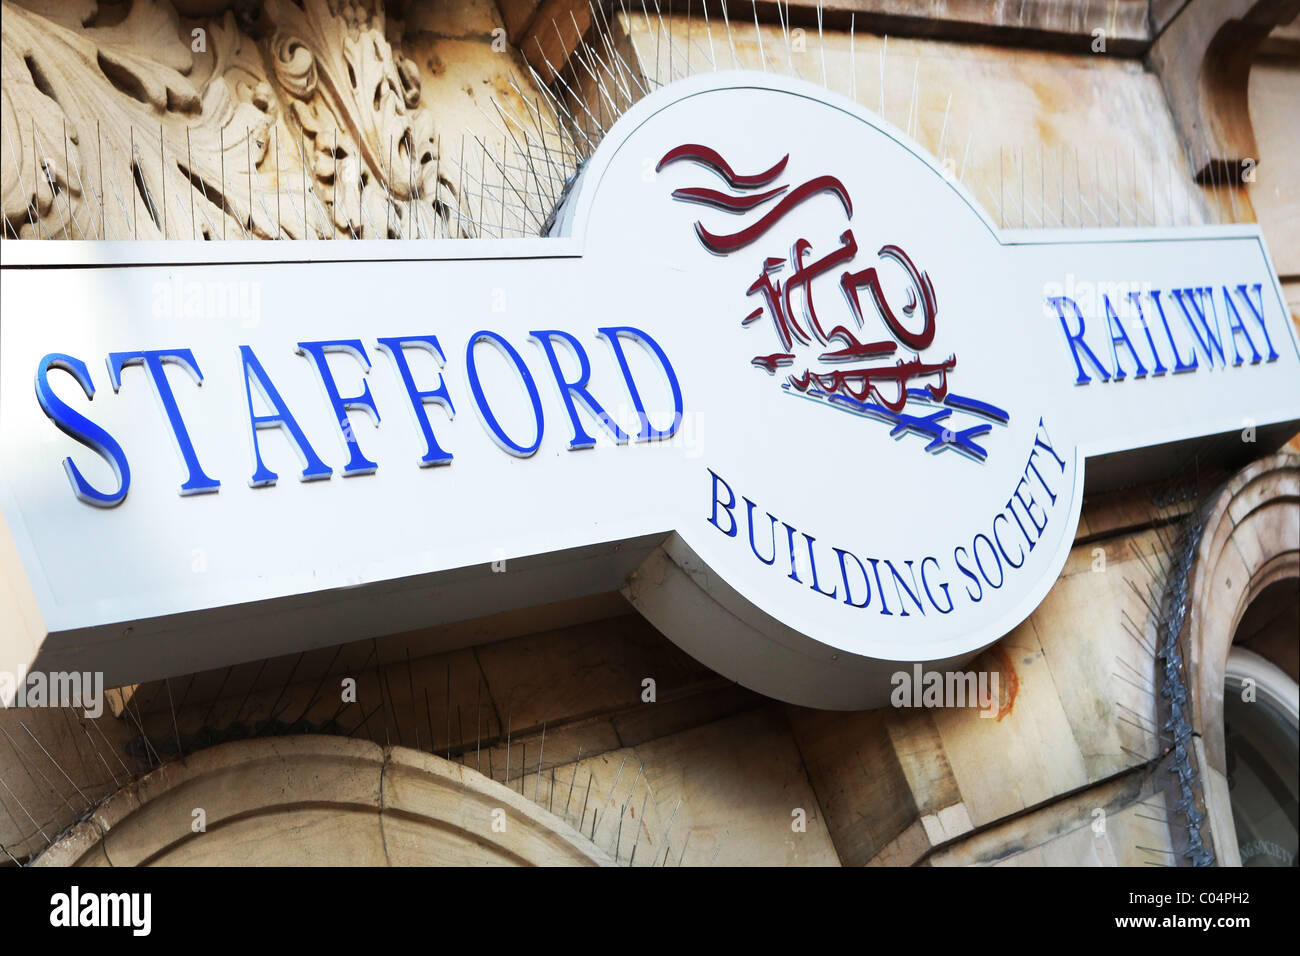 Stafford Railway Building Society digital signage presso la sua sede in Stafford Foto Stock